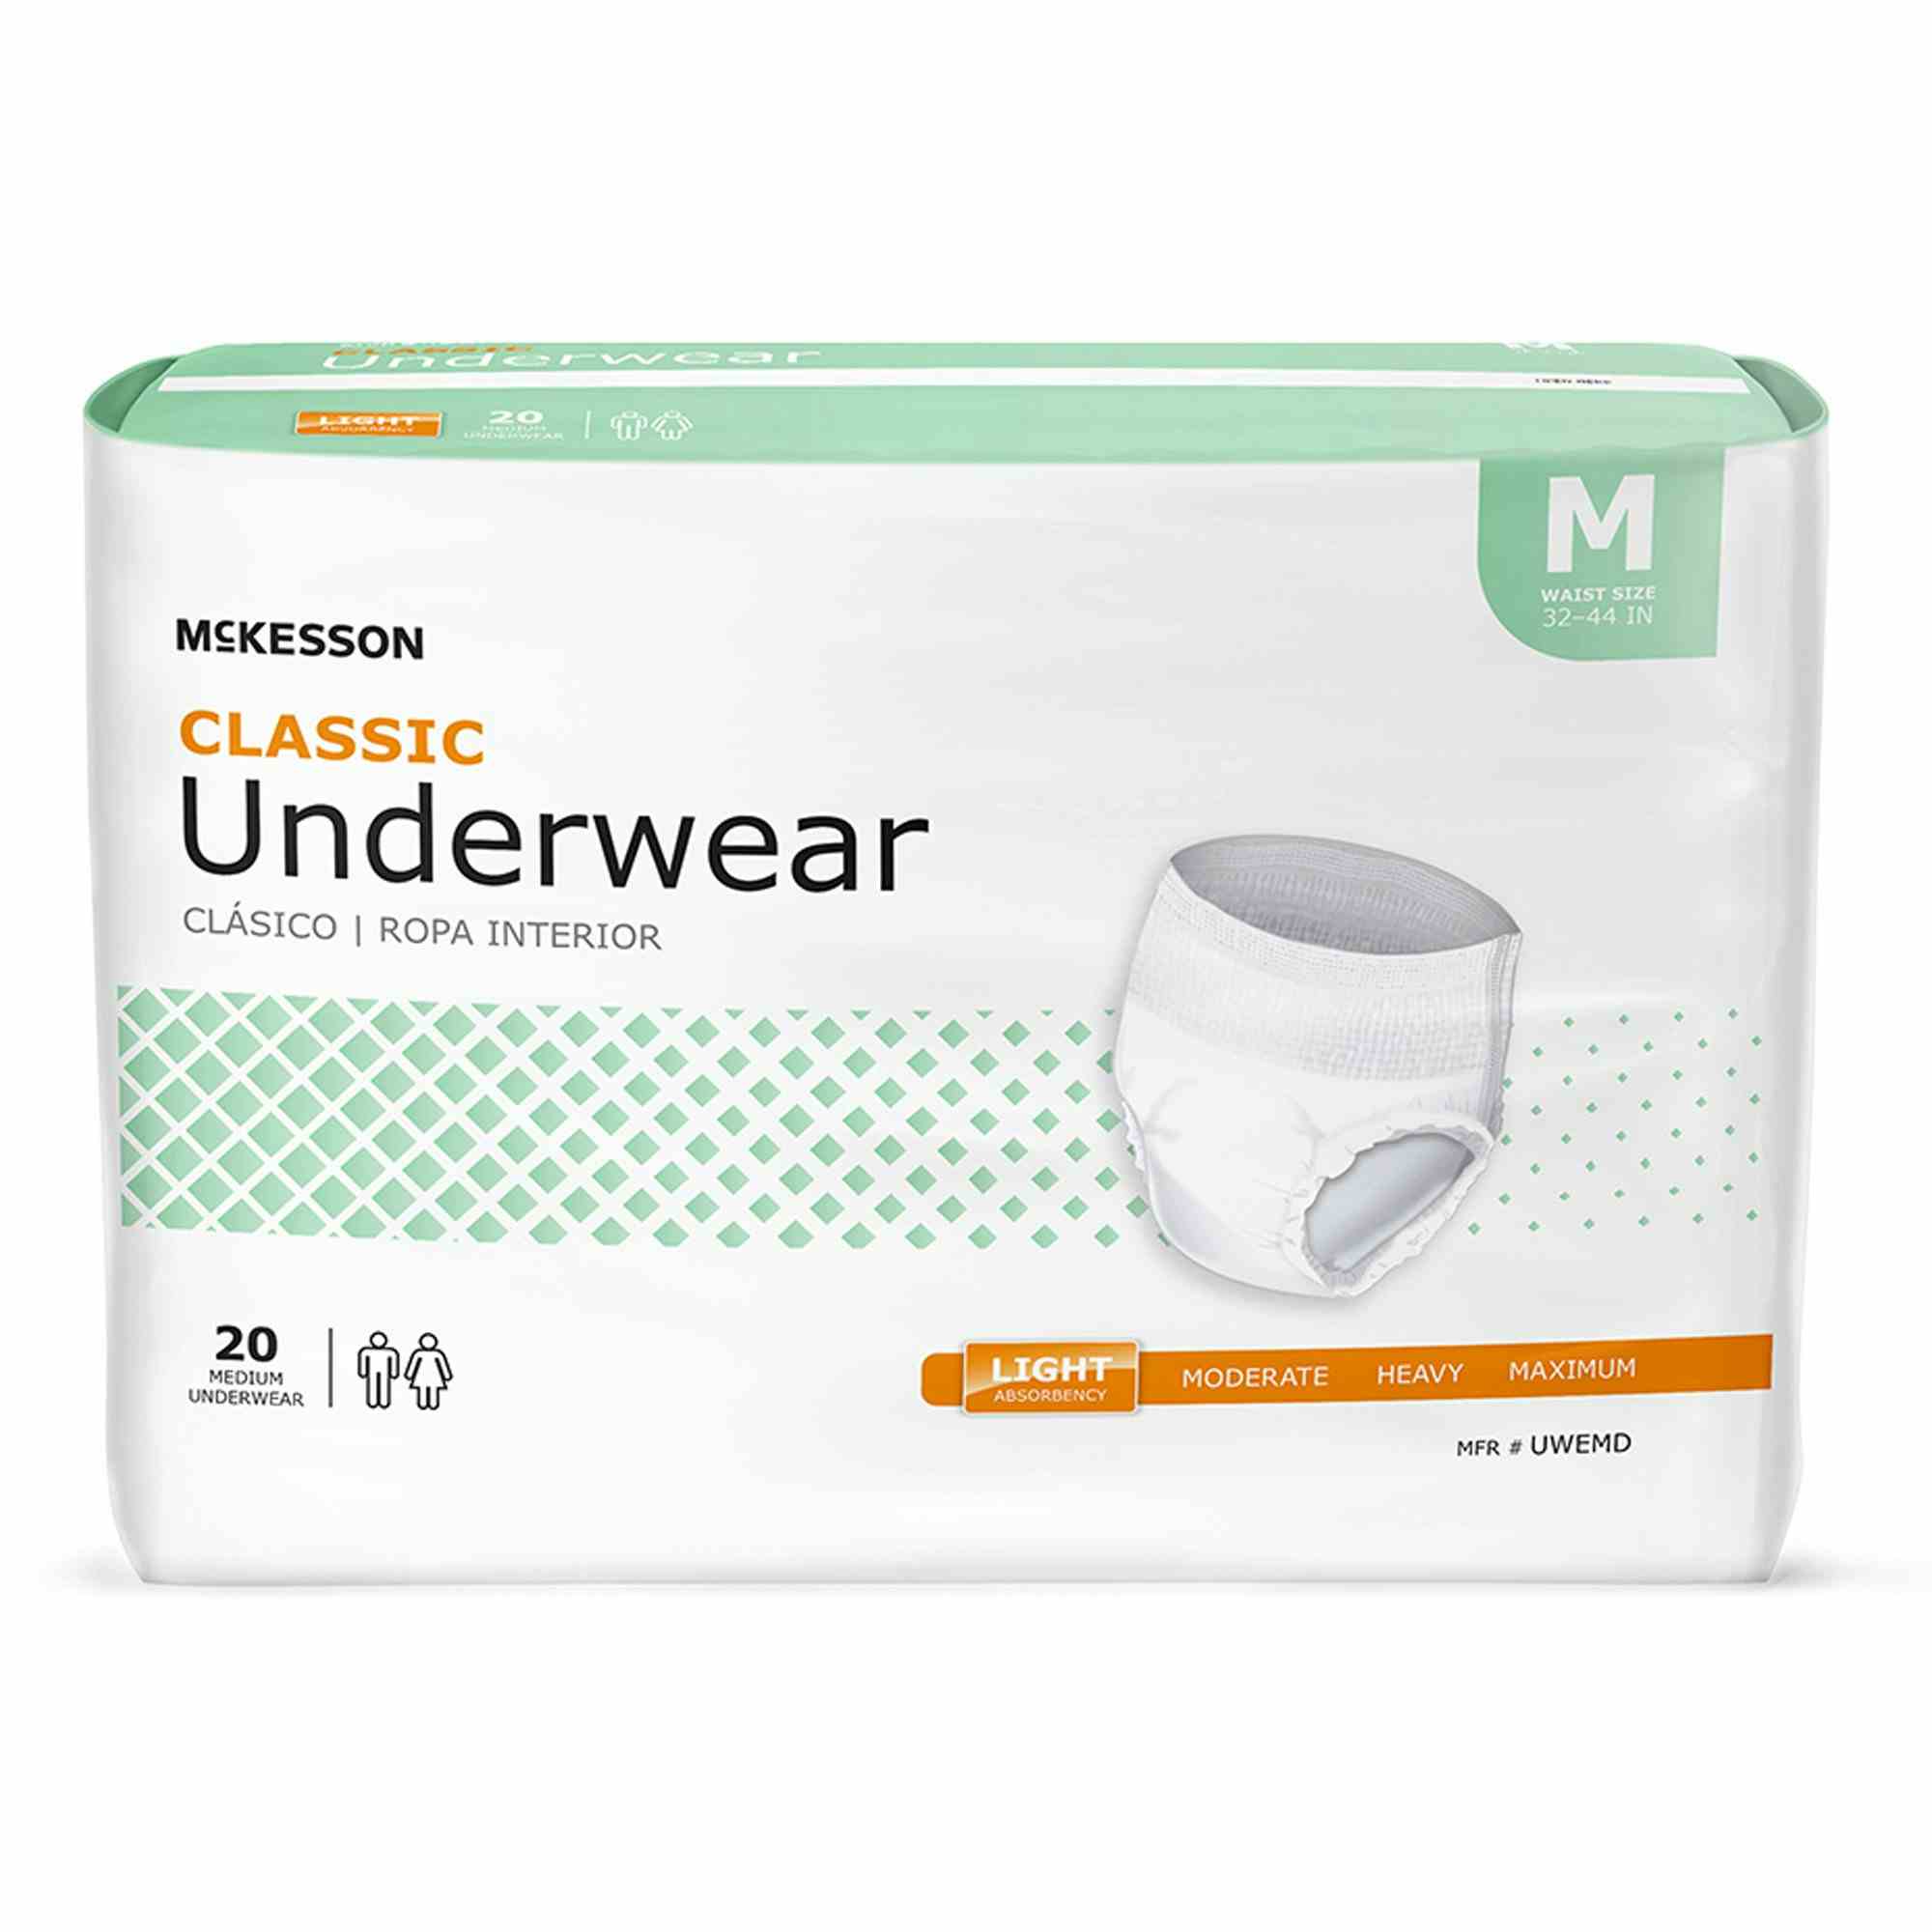 McKesson Classic Underwear, Light Absorbency